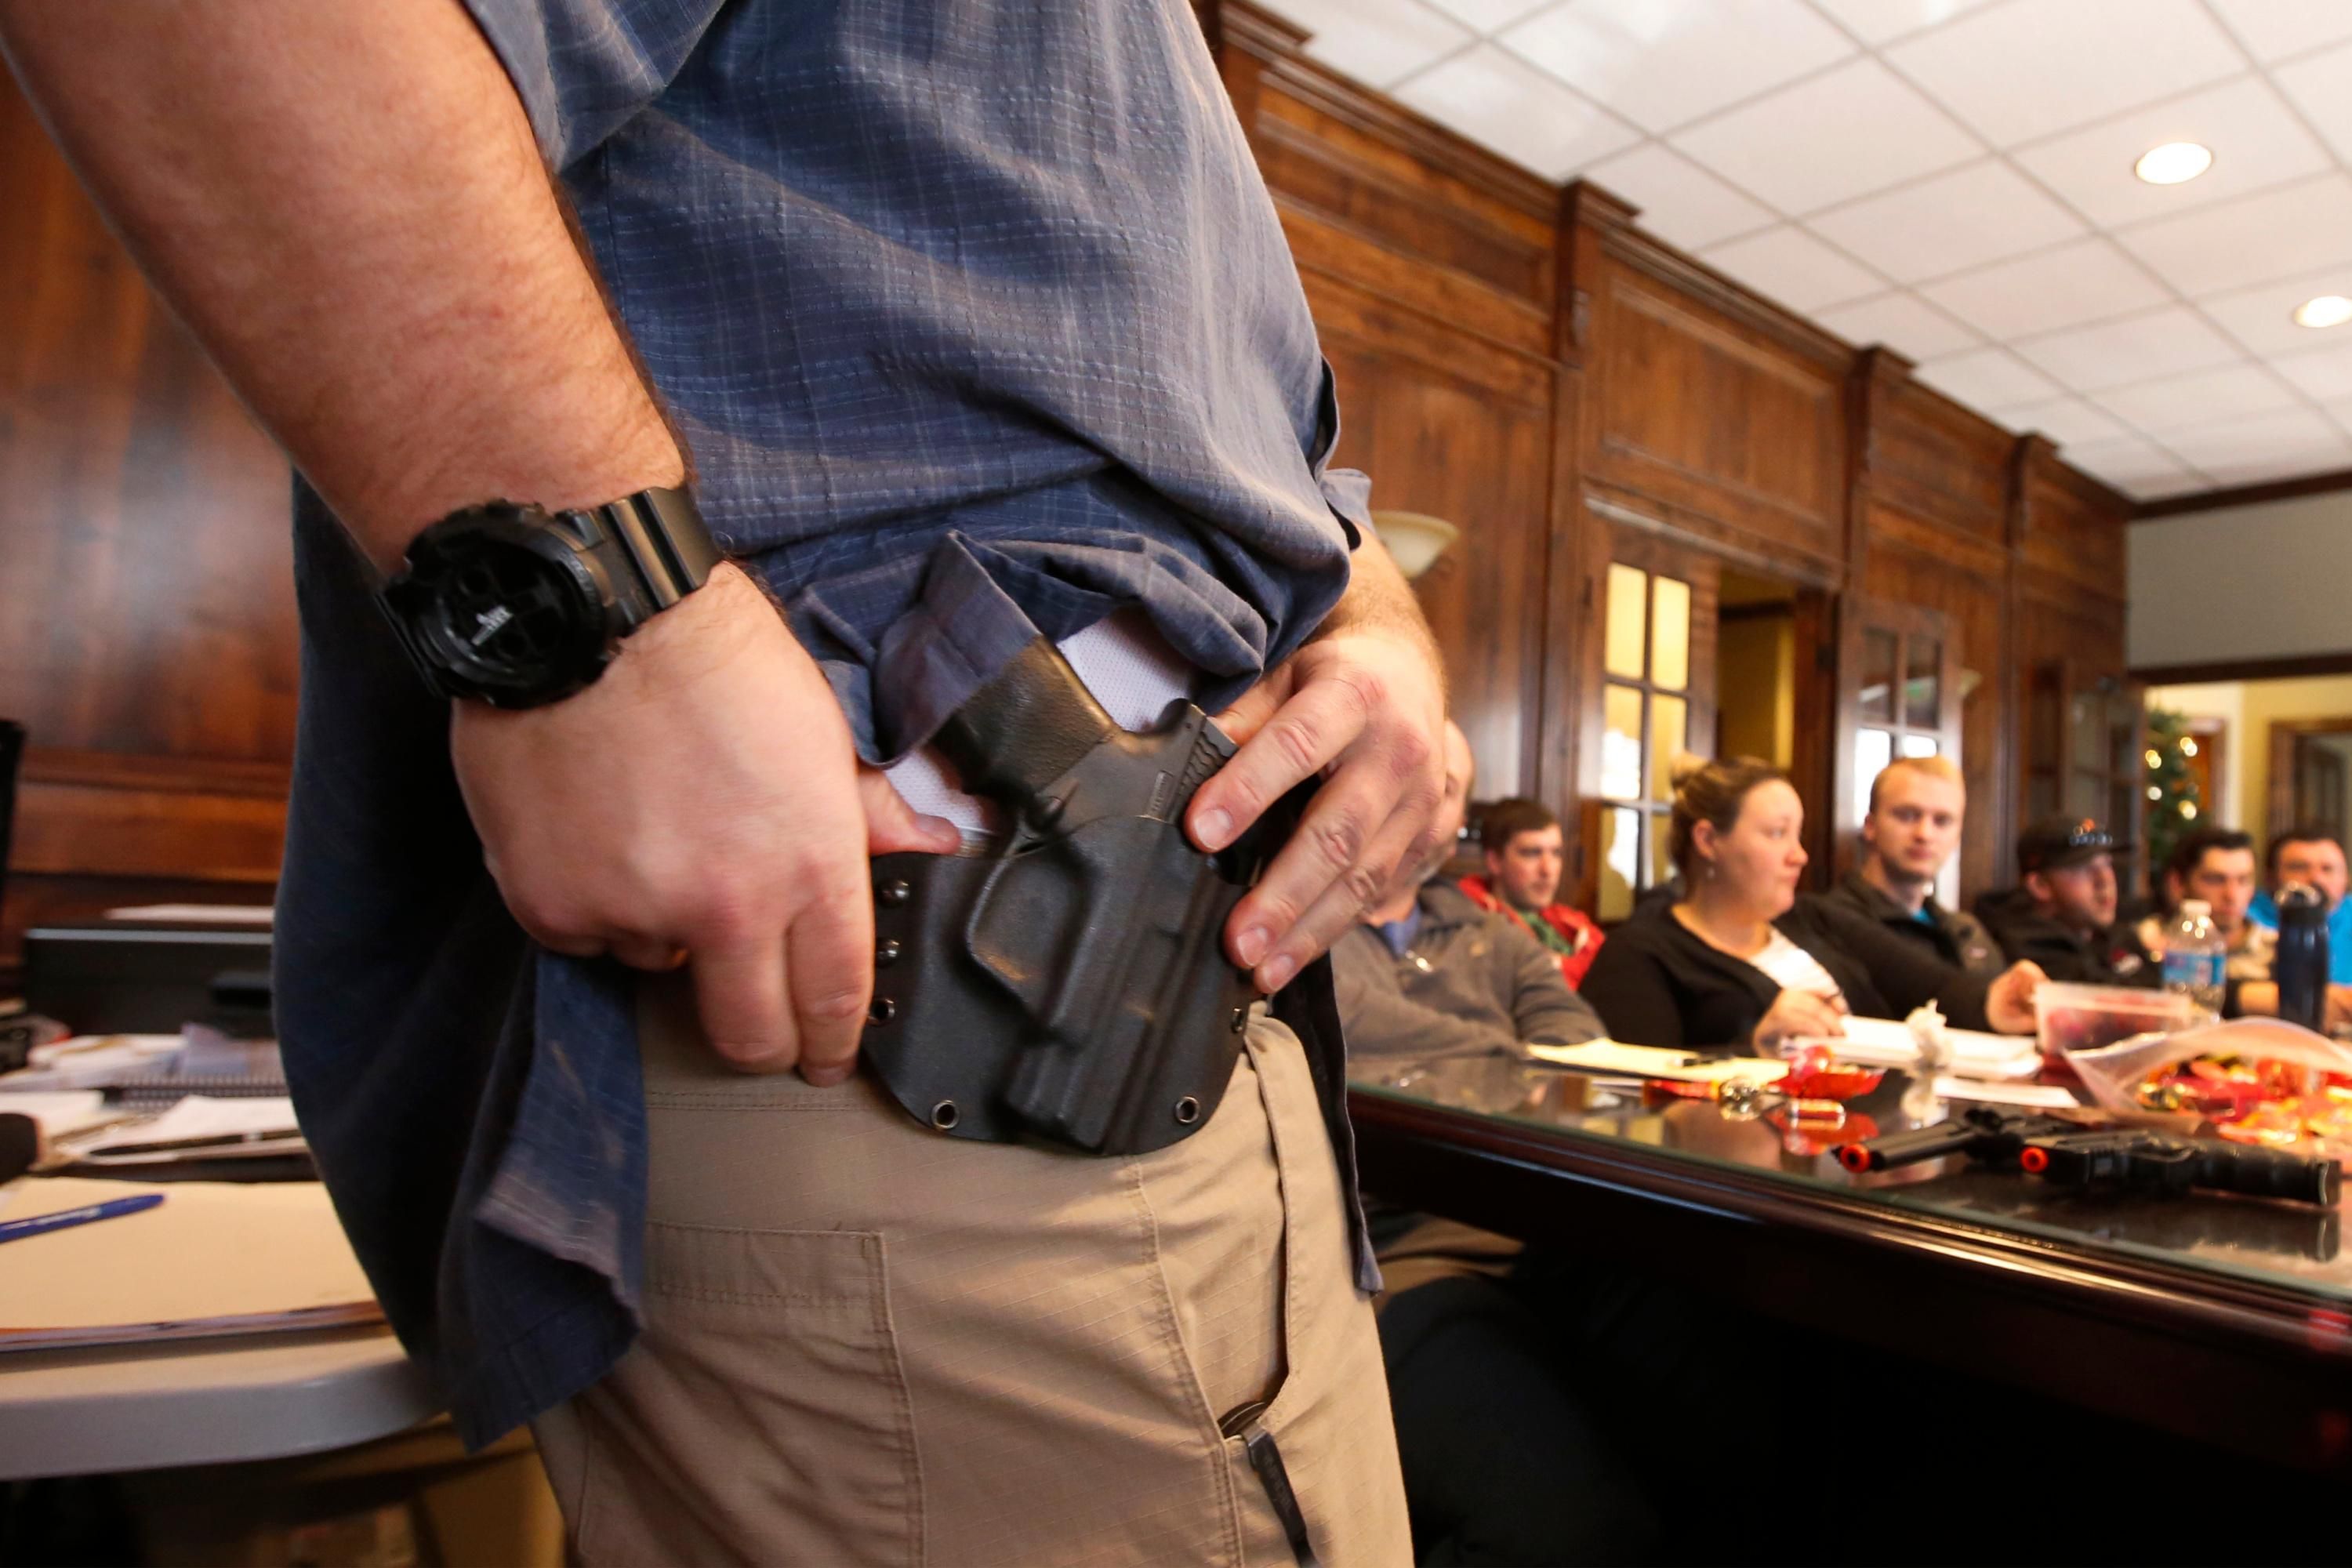 A man shows a gun holdster